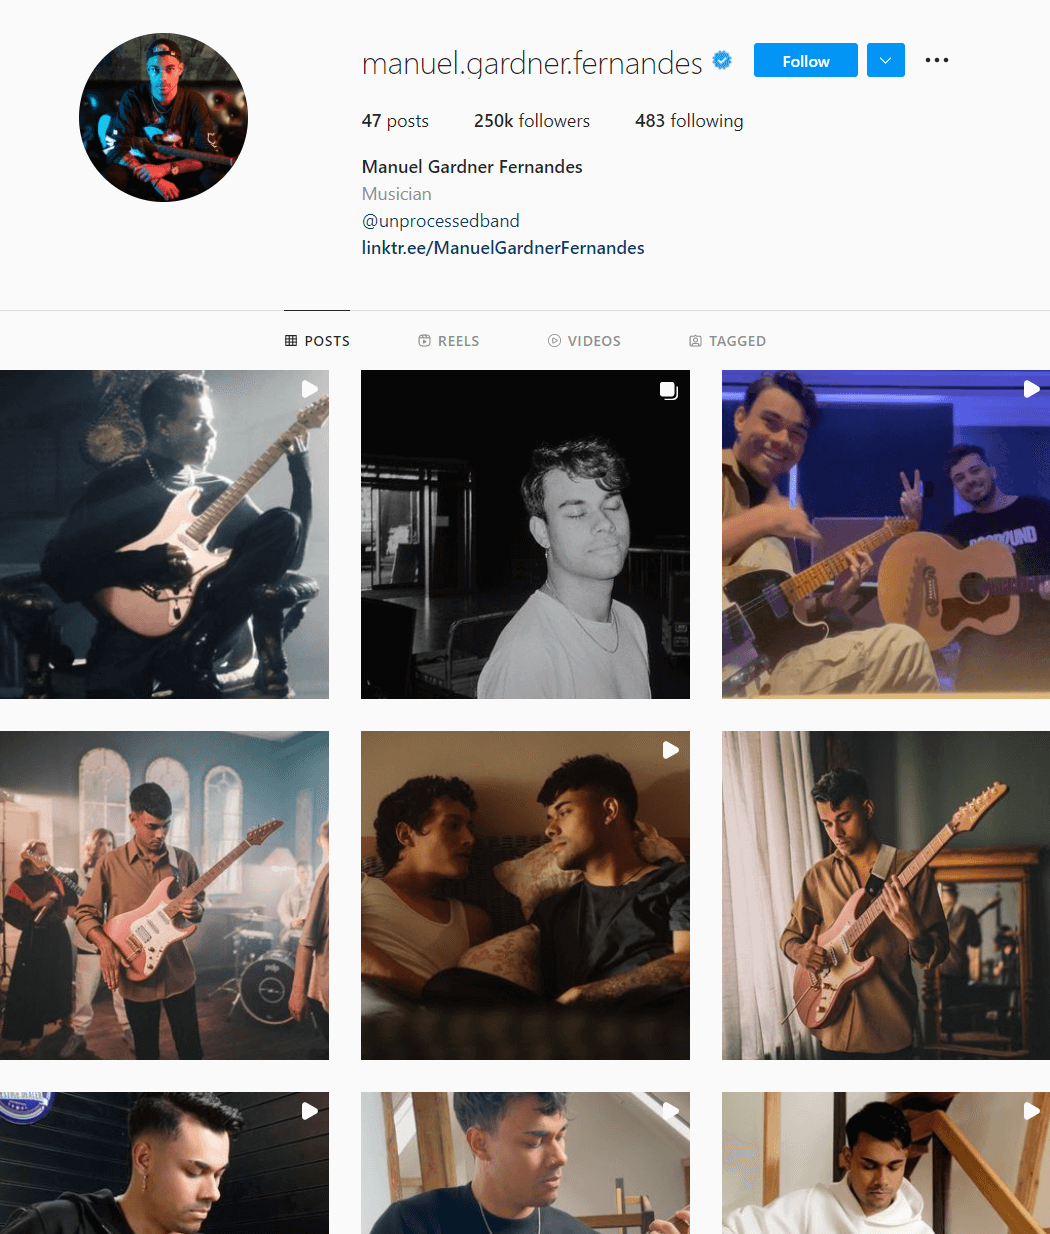 manuel.gardner.fernandes guitar Instagram account